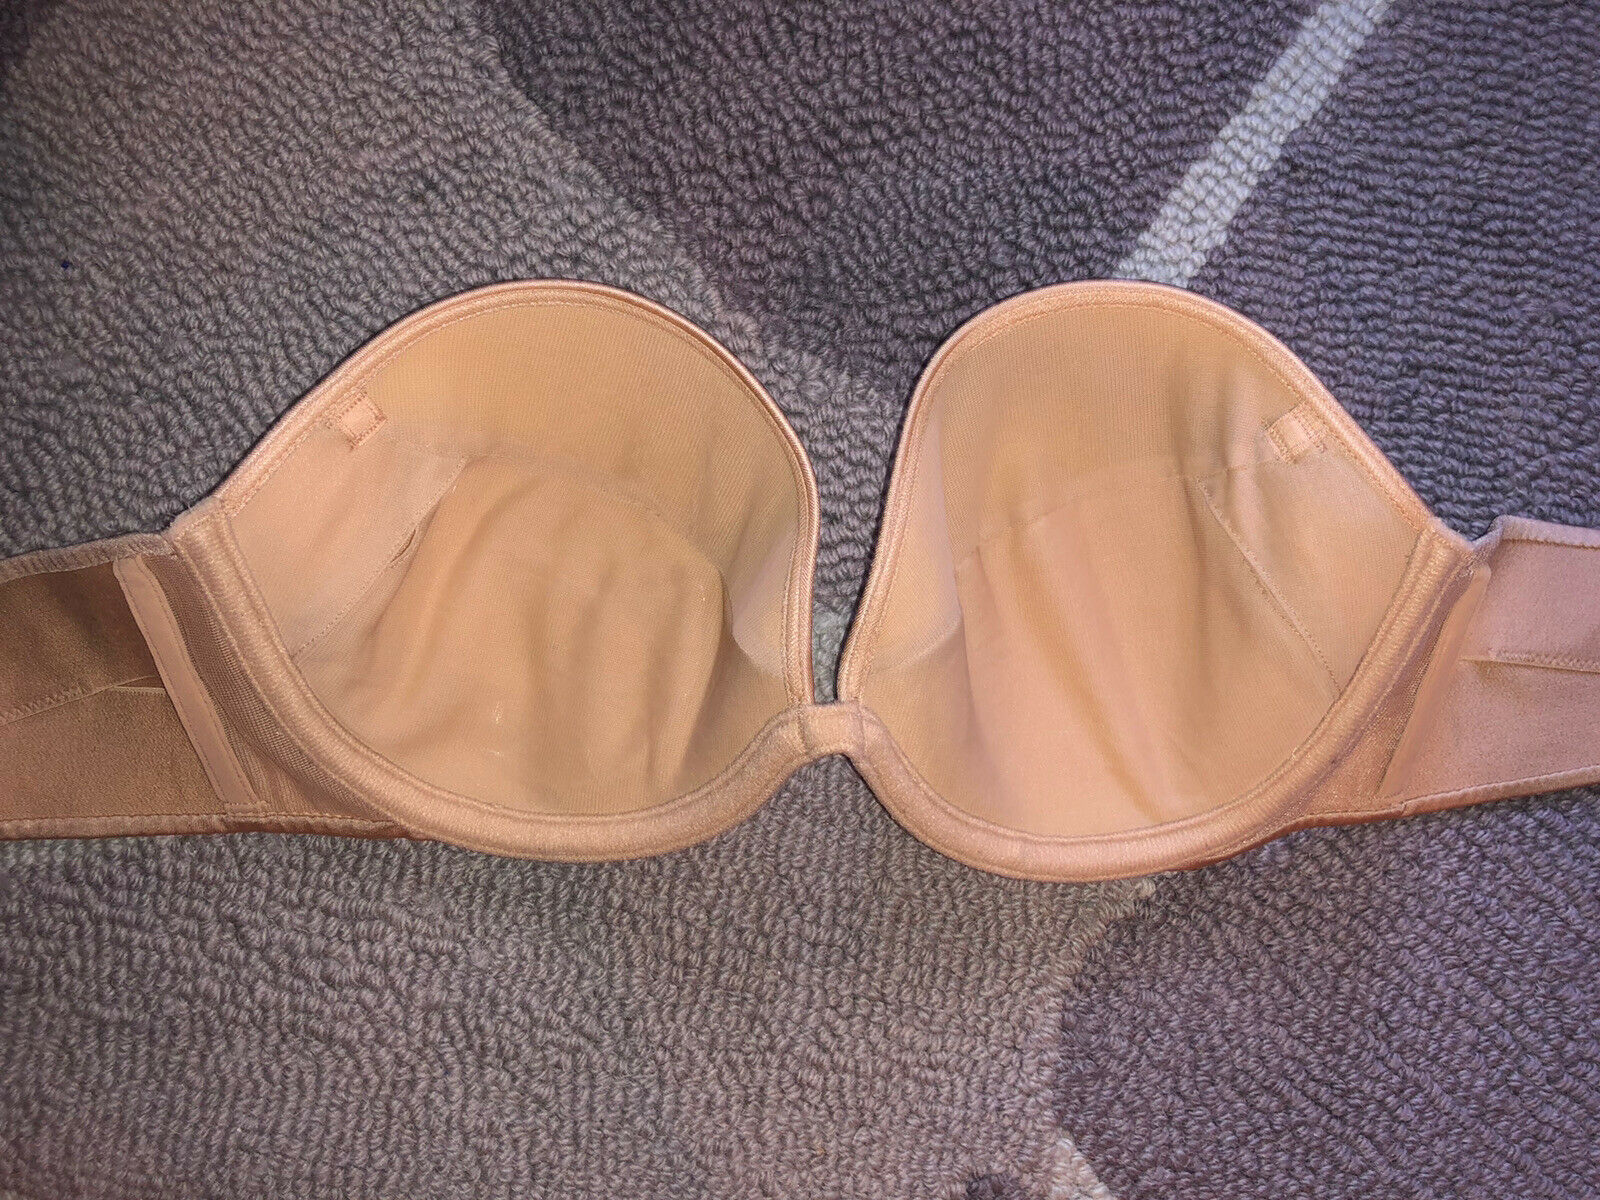 Victorias Secret Dream Angels Tan Nude Lined Demi Bra Size 34DD